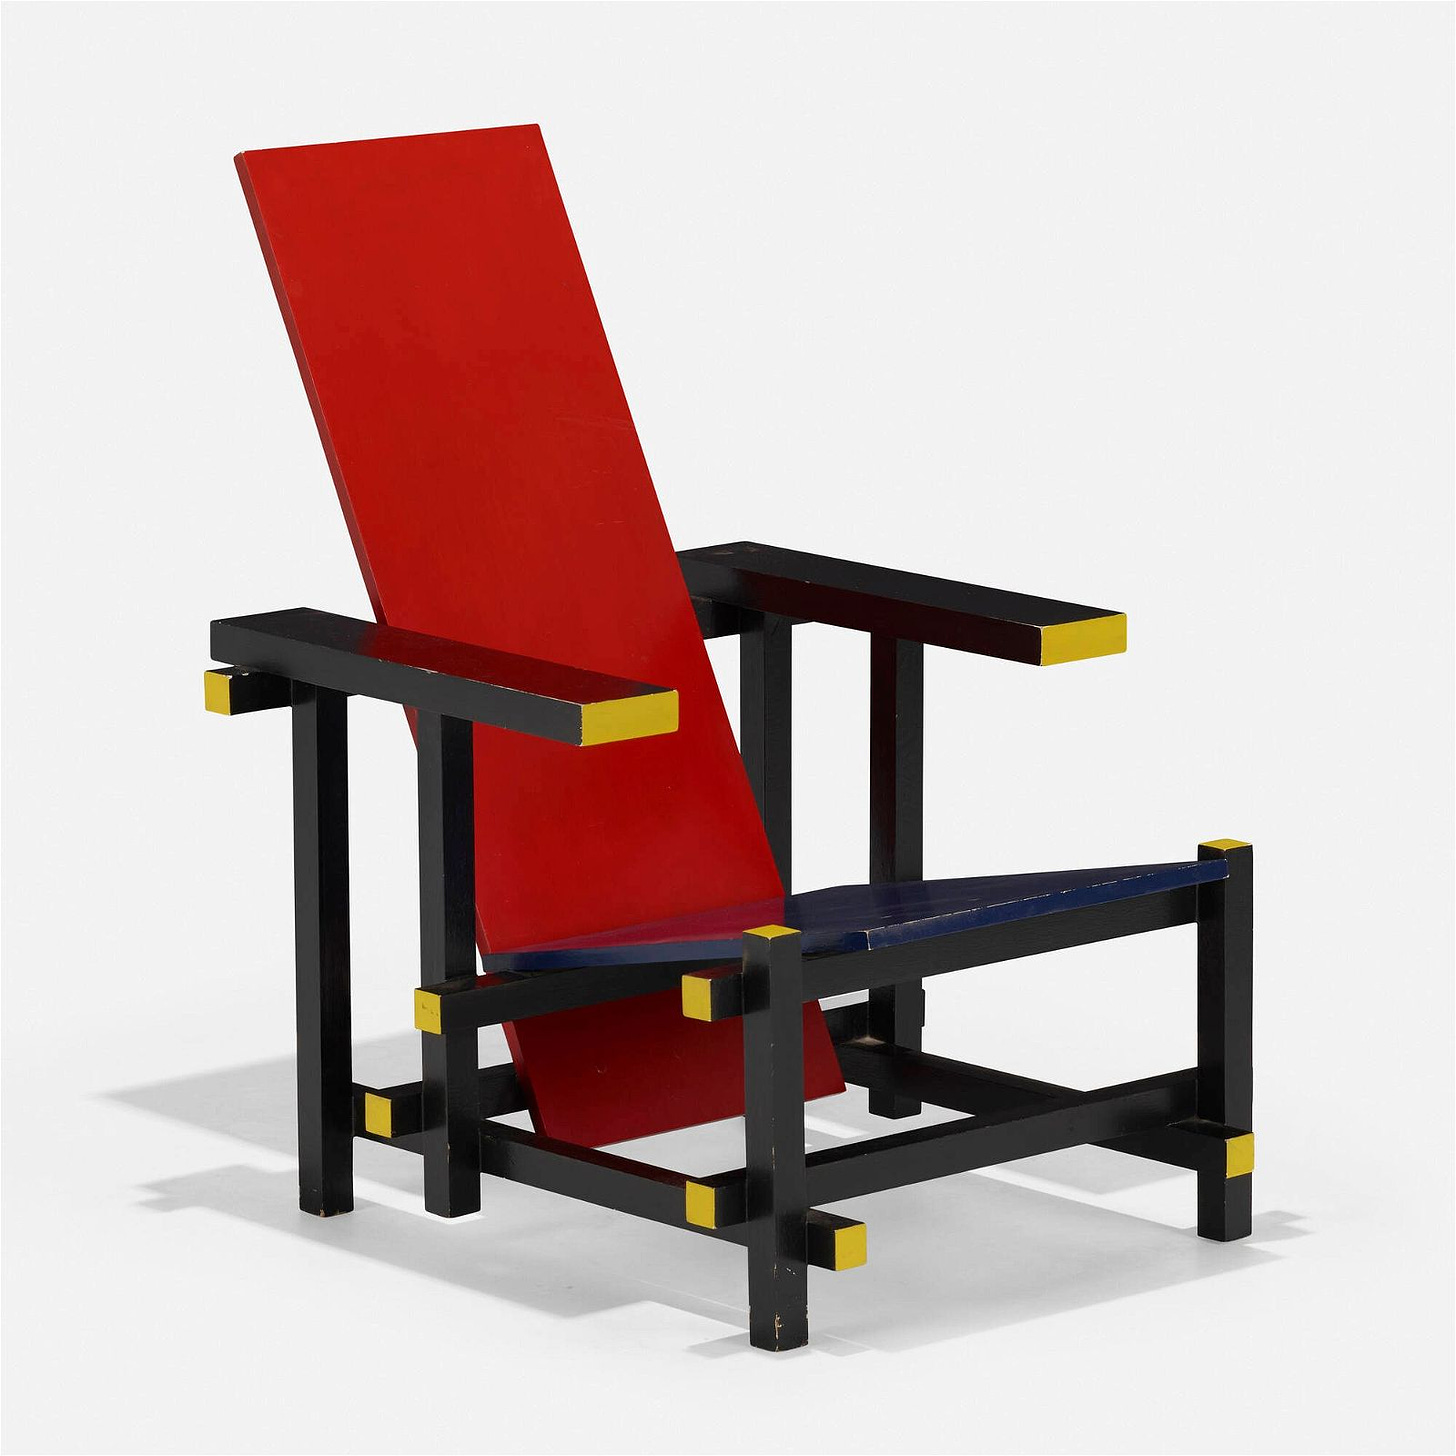 Gerrit Rietveld, Red Blue chair